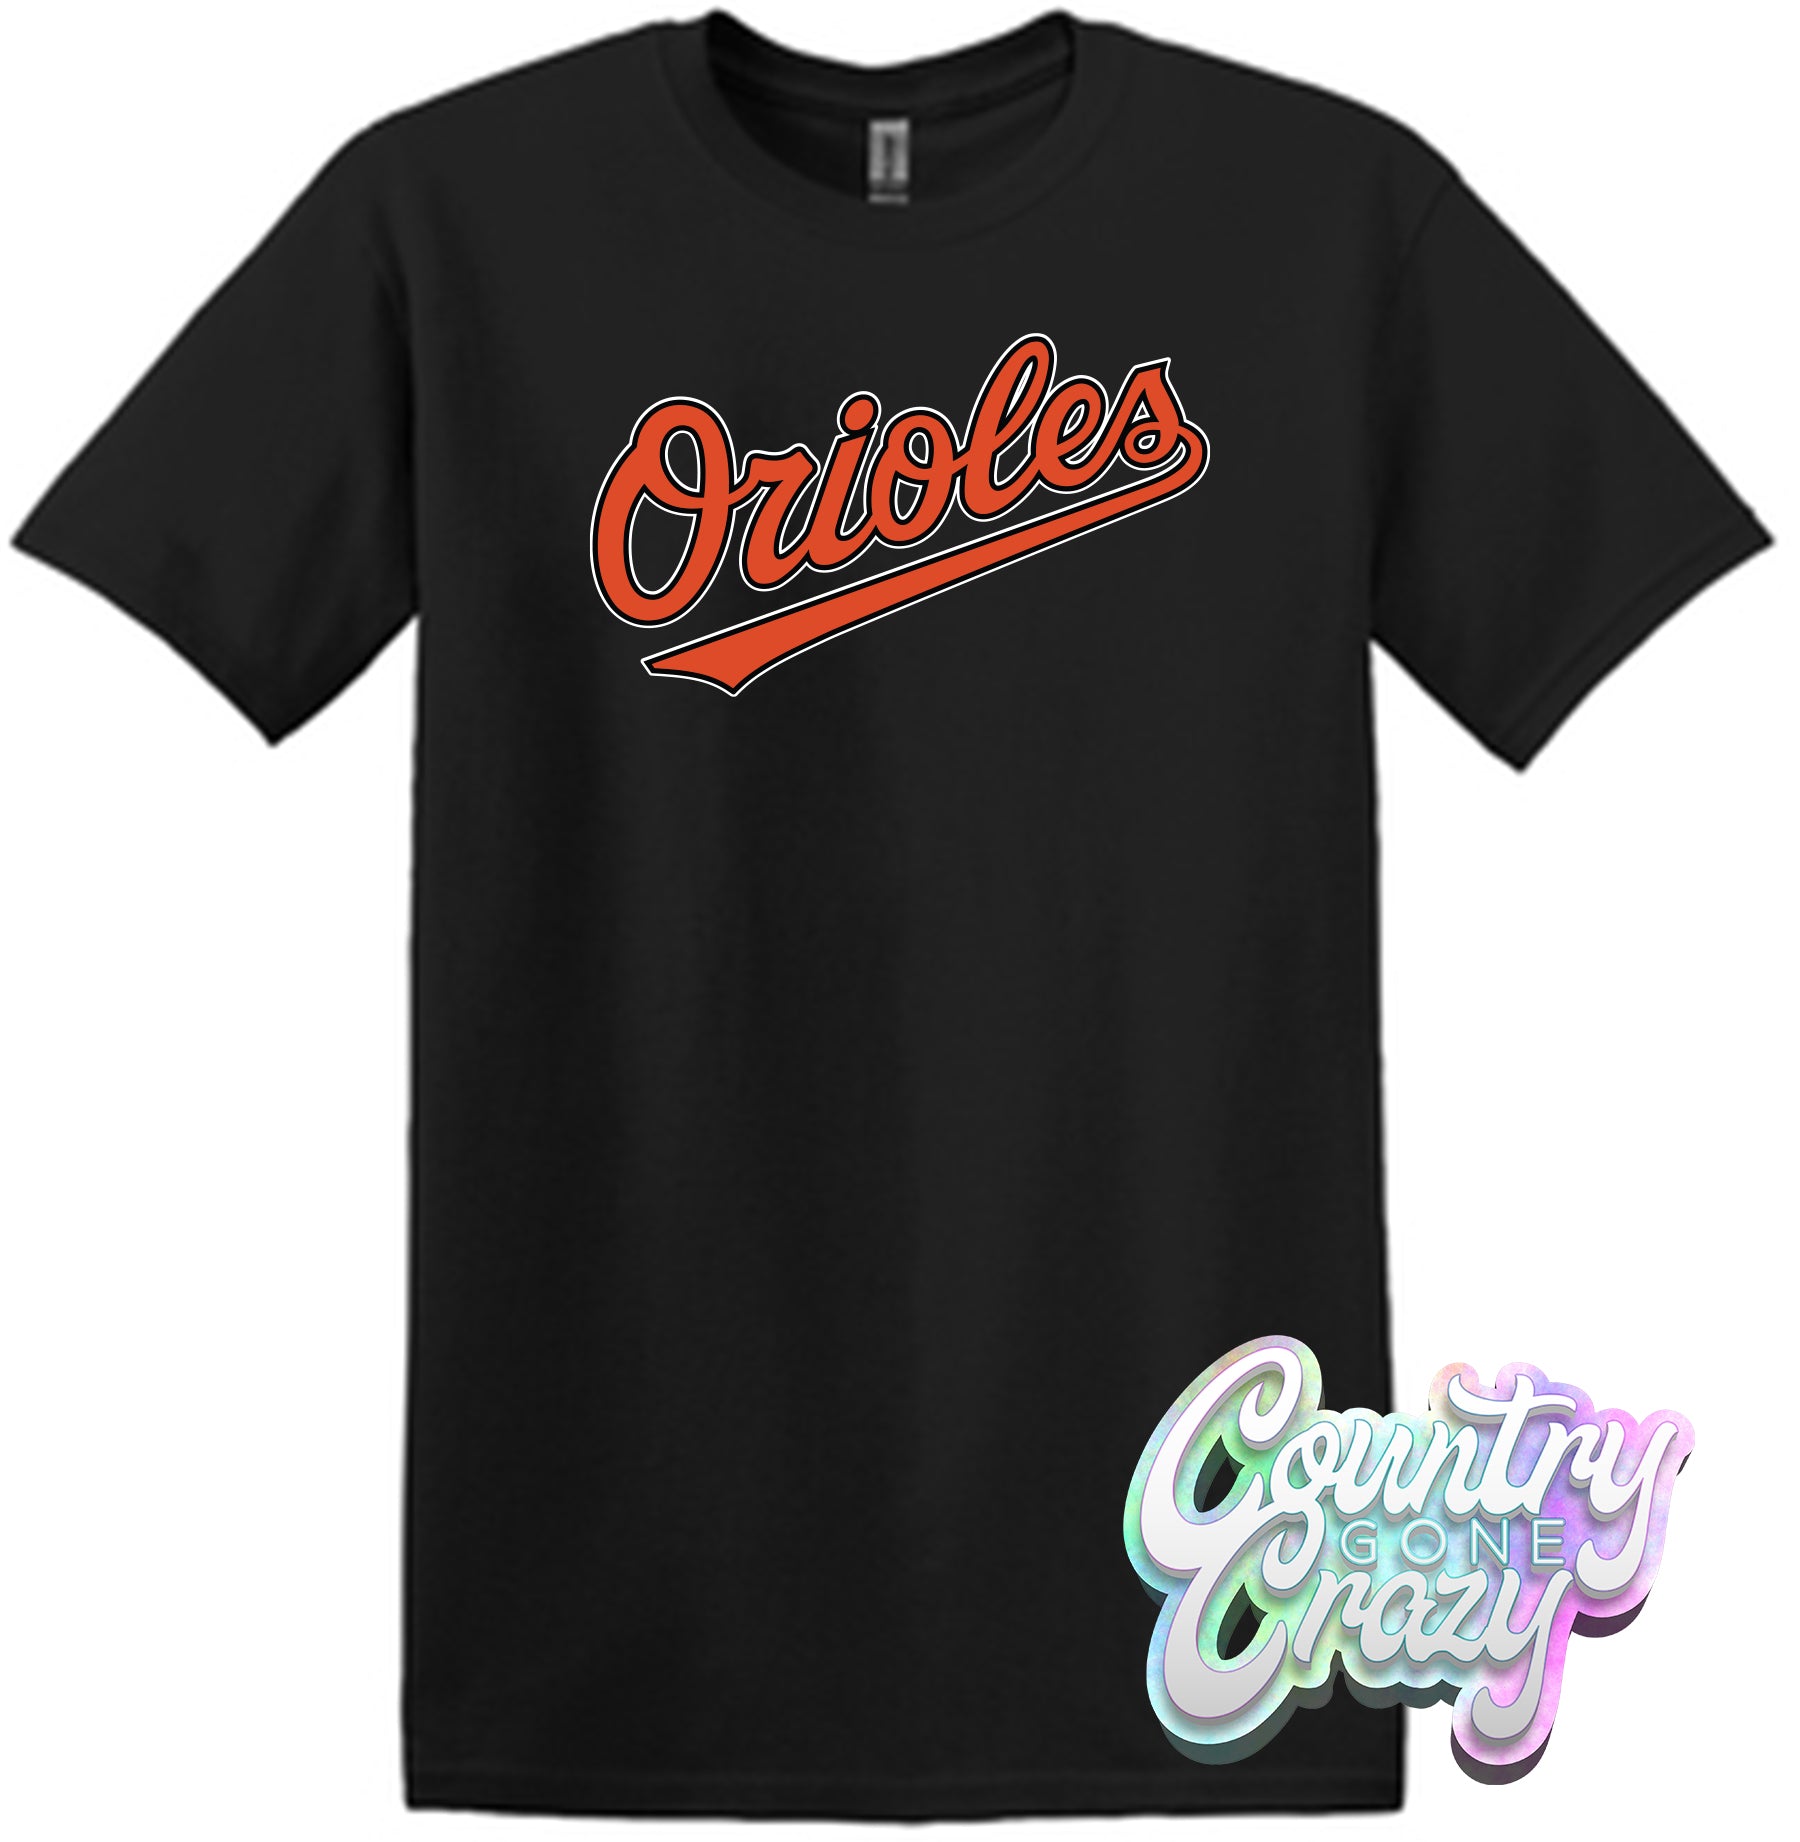 Baltimore Orioles, Shirts